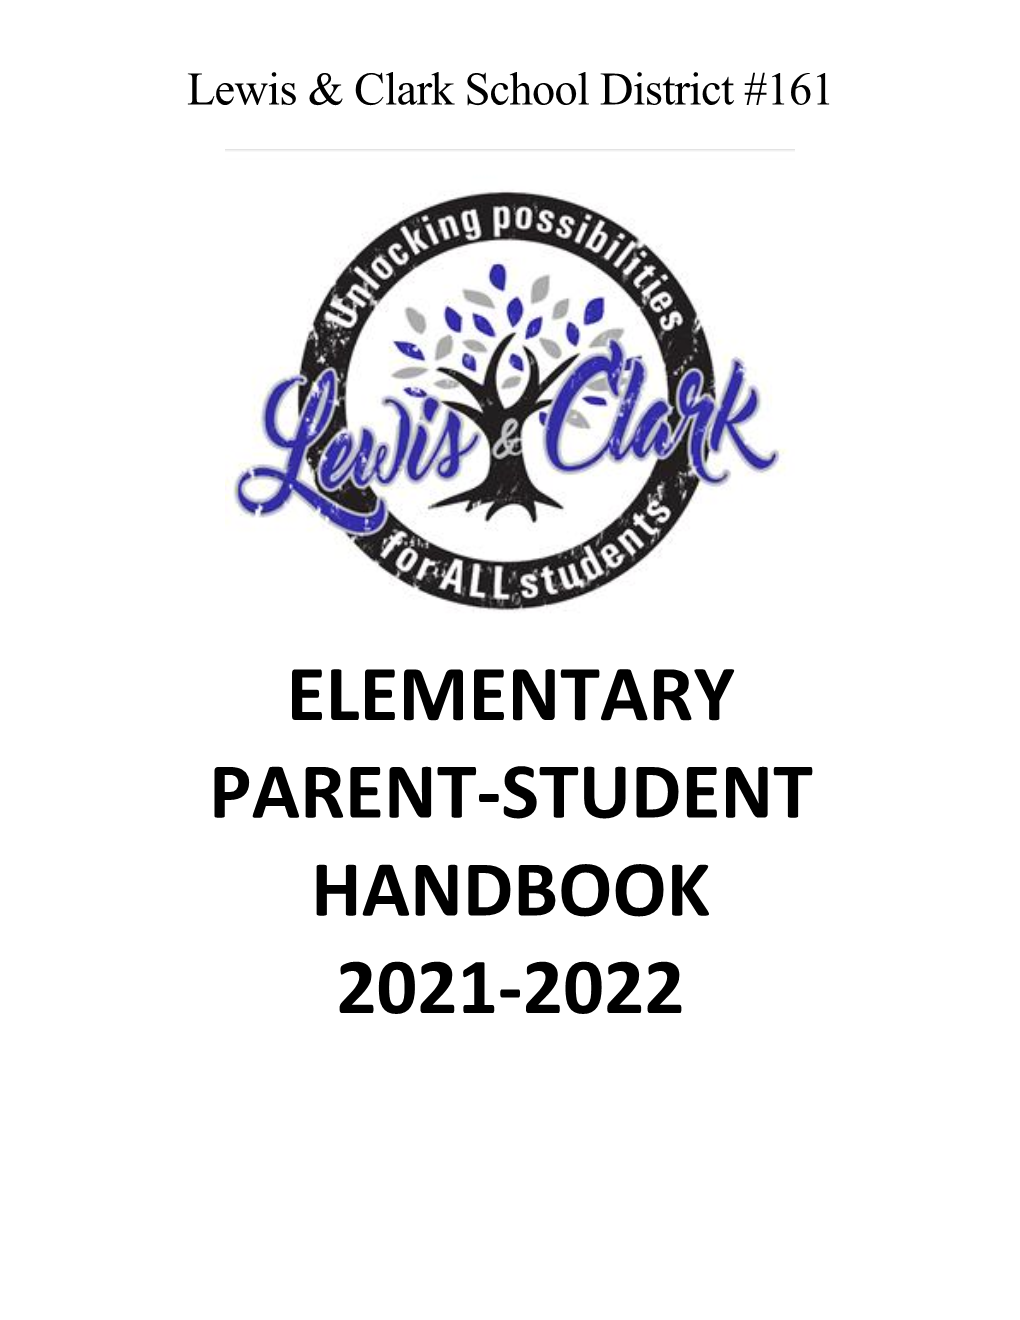 Elementary Parent-Student Handbook 2021-2022